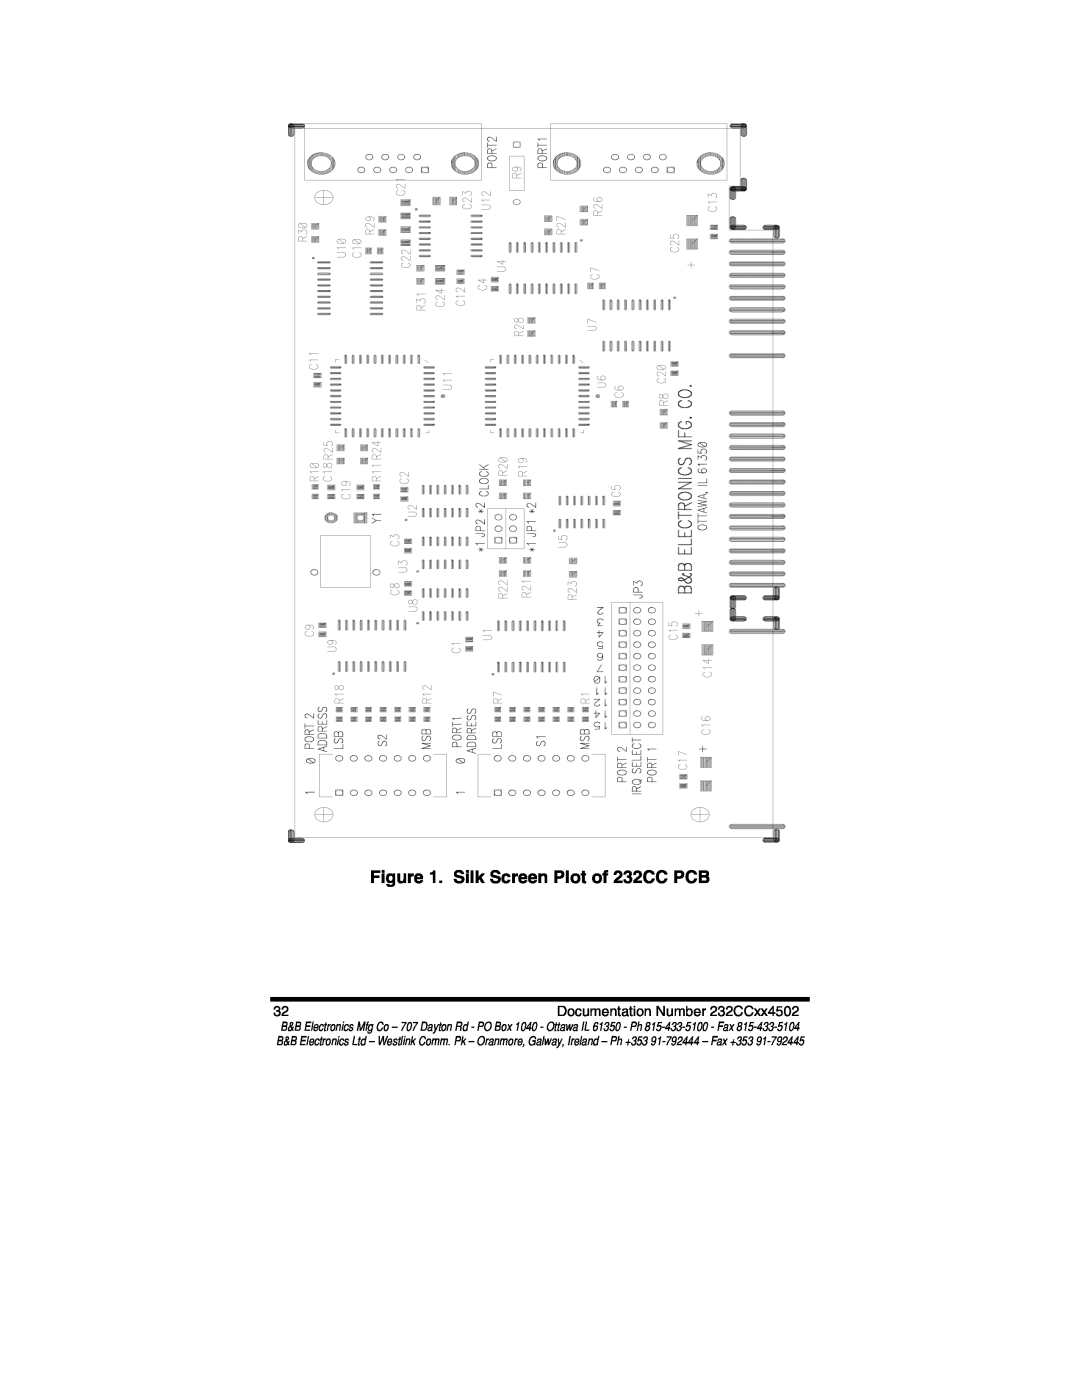 B&B Electronics 232CC2A, 232CC1B, 232CC2B, 232CC1A manual Silk Screen Plot of 232CC PCB, Documentation Number 232CCxx4502 